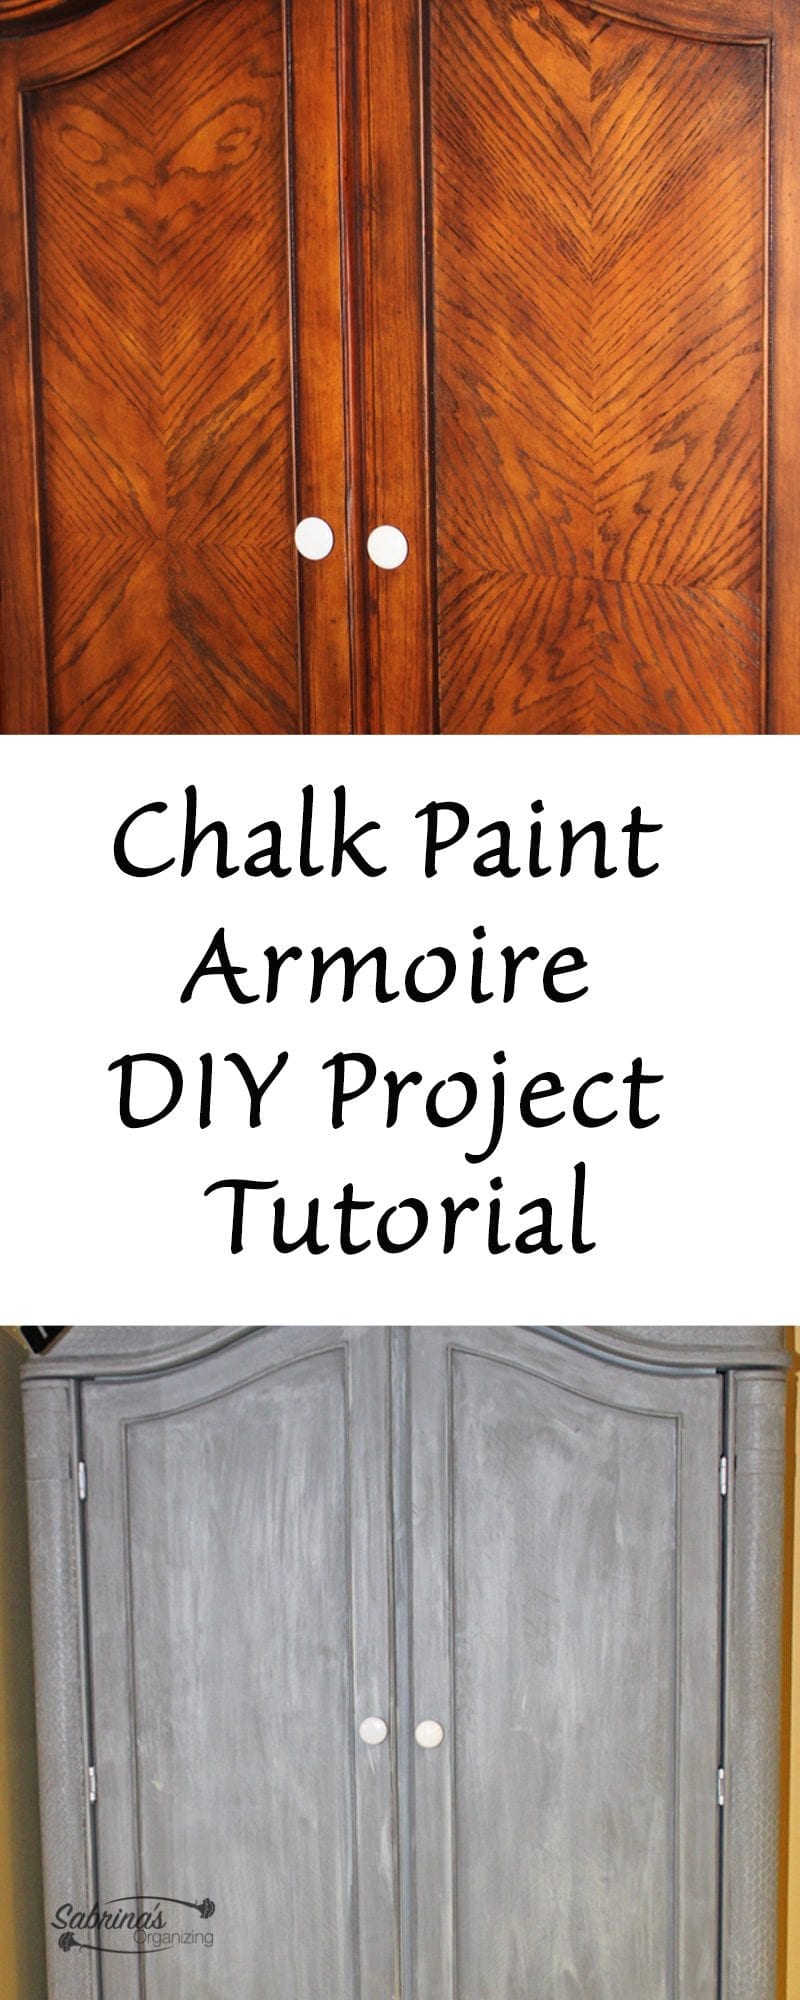 Chalk Paint Armoire DIY Project Tutorial